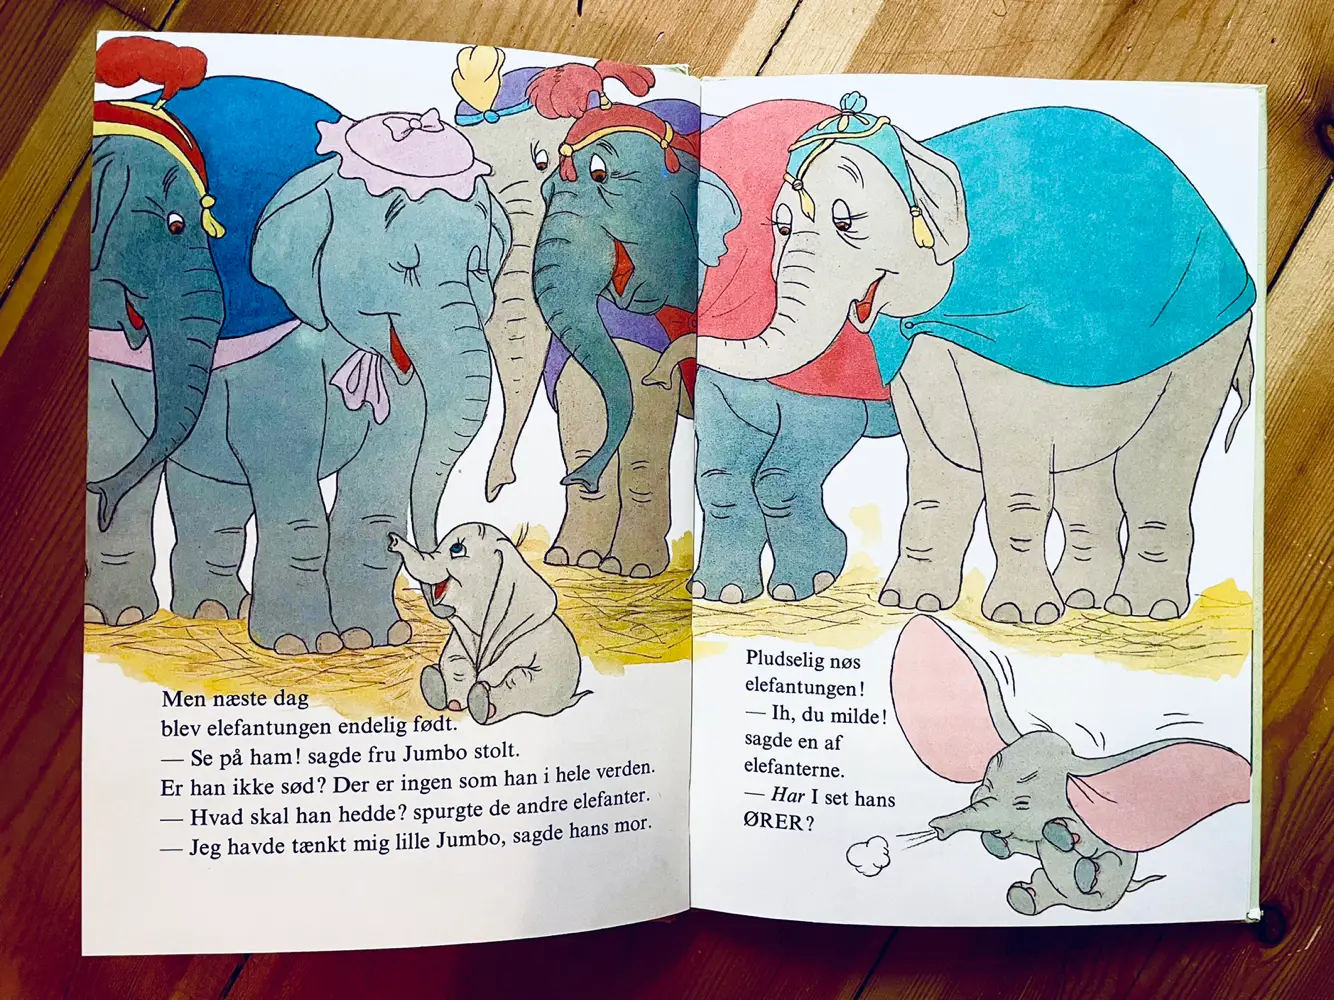 Dumbo Bøger